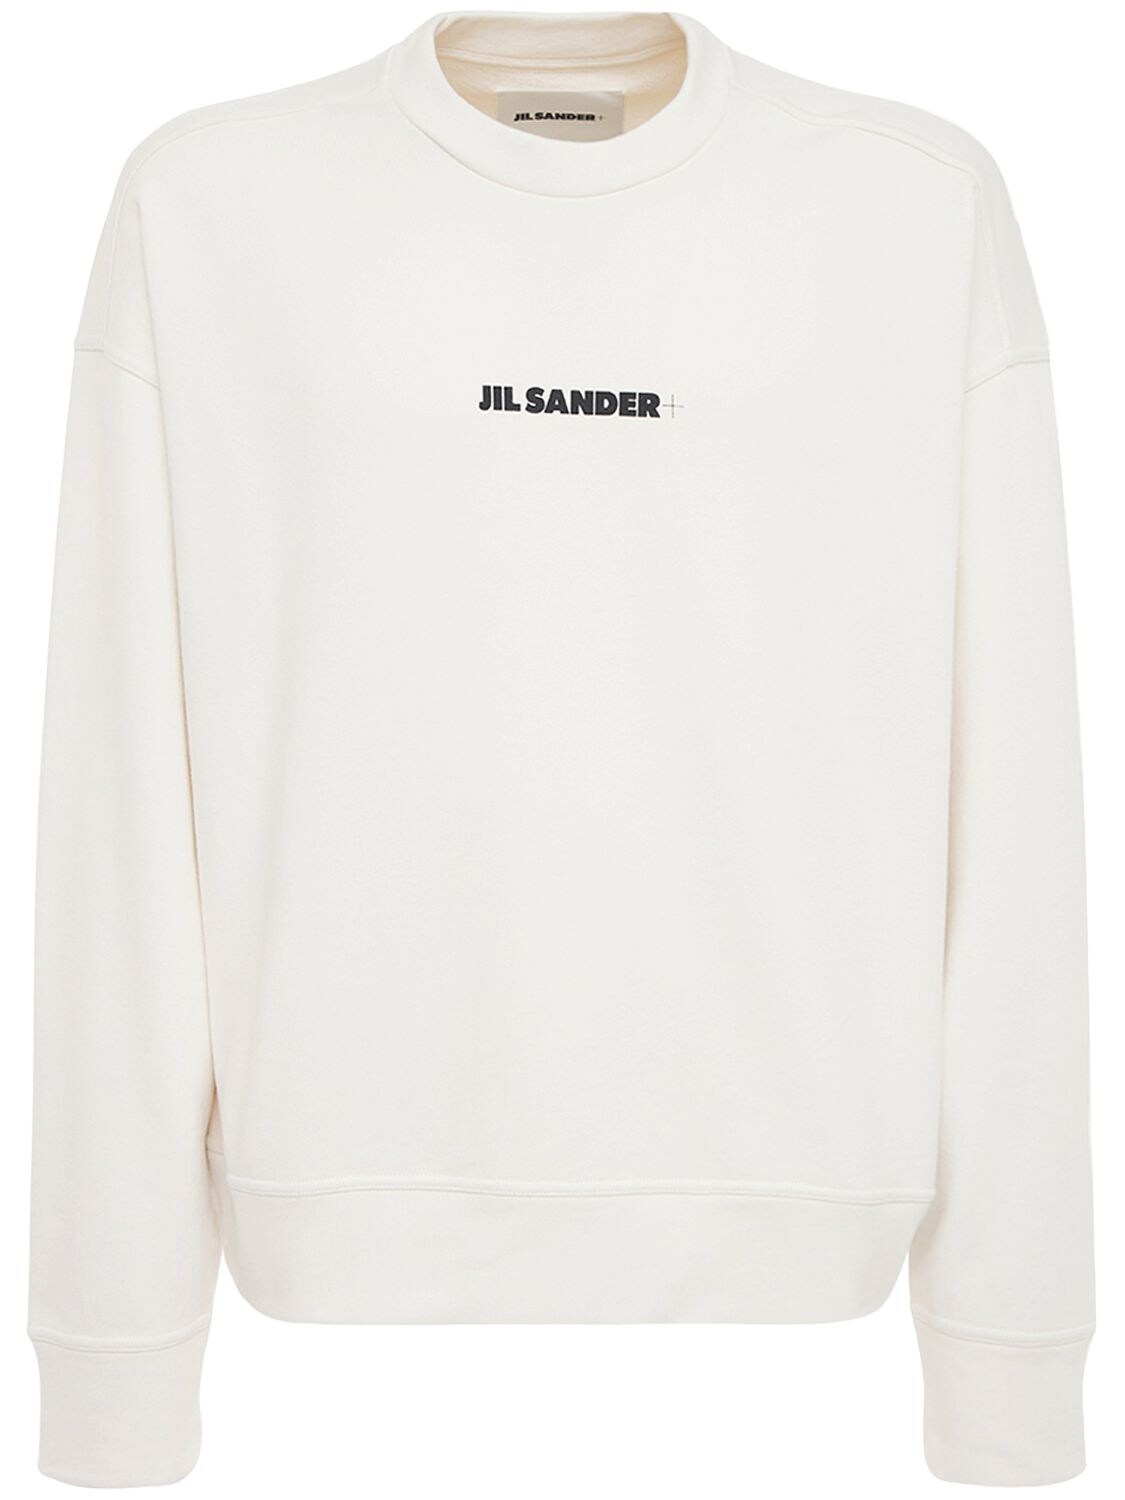 JIL SANDER Plus Printed Cotton Sweatshirt